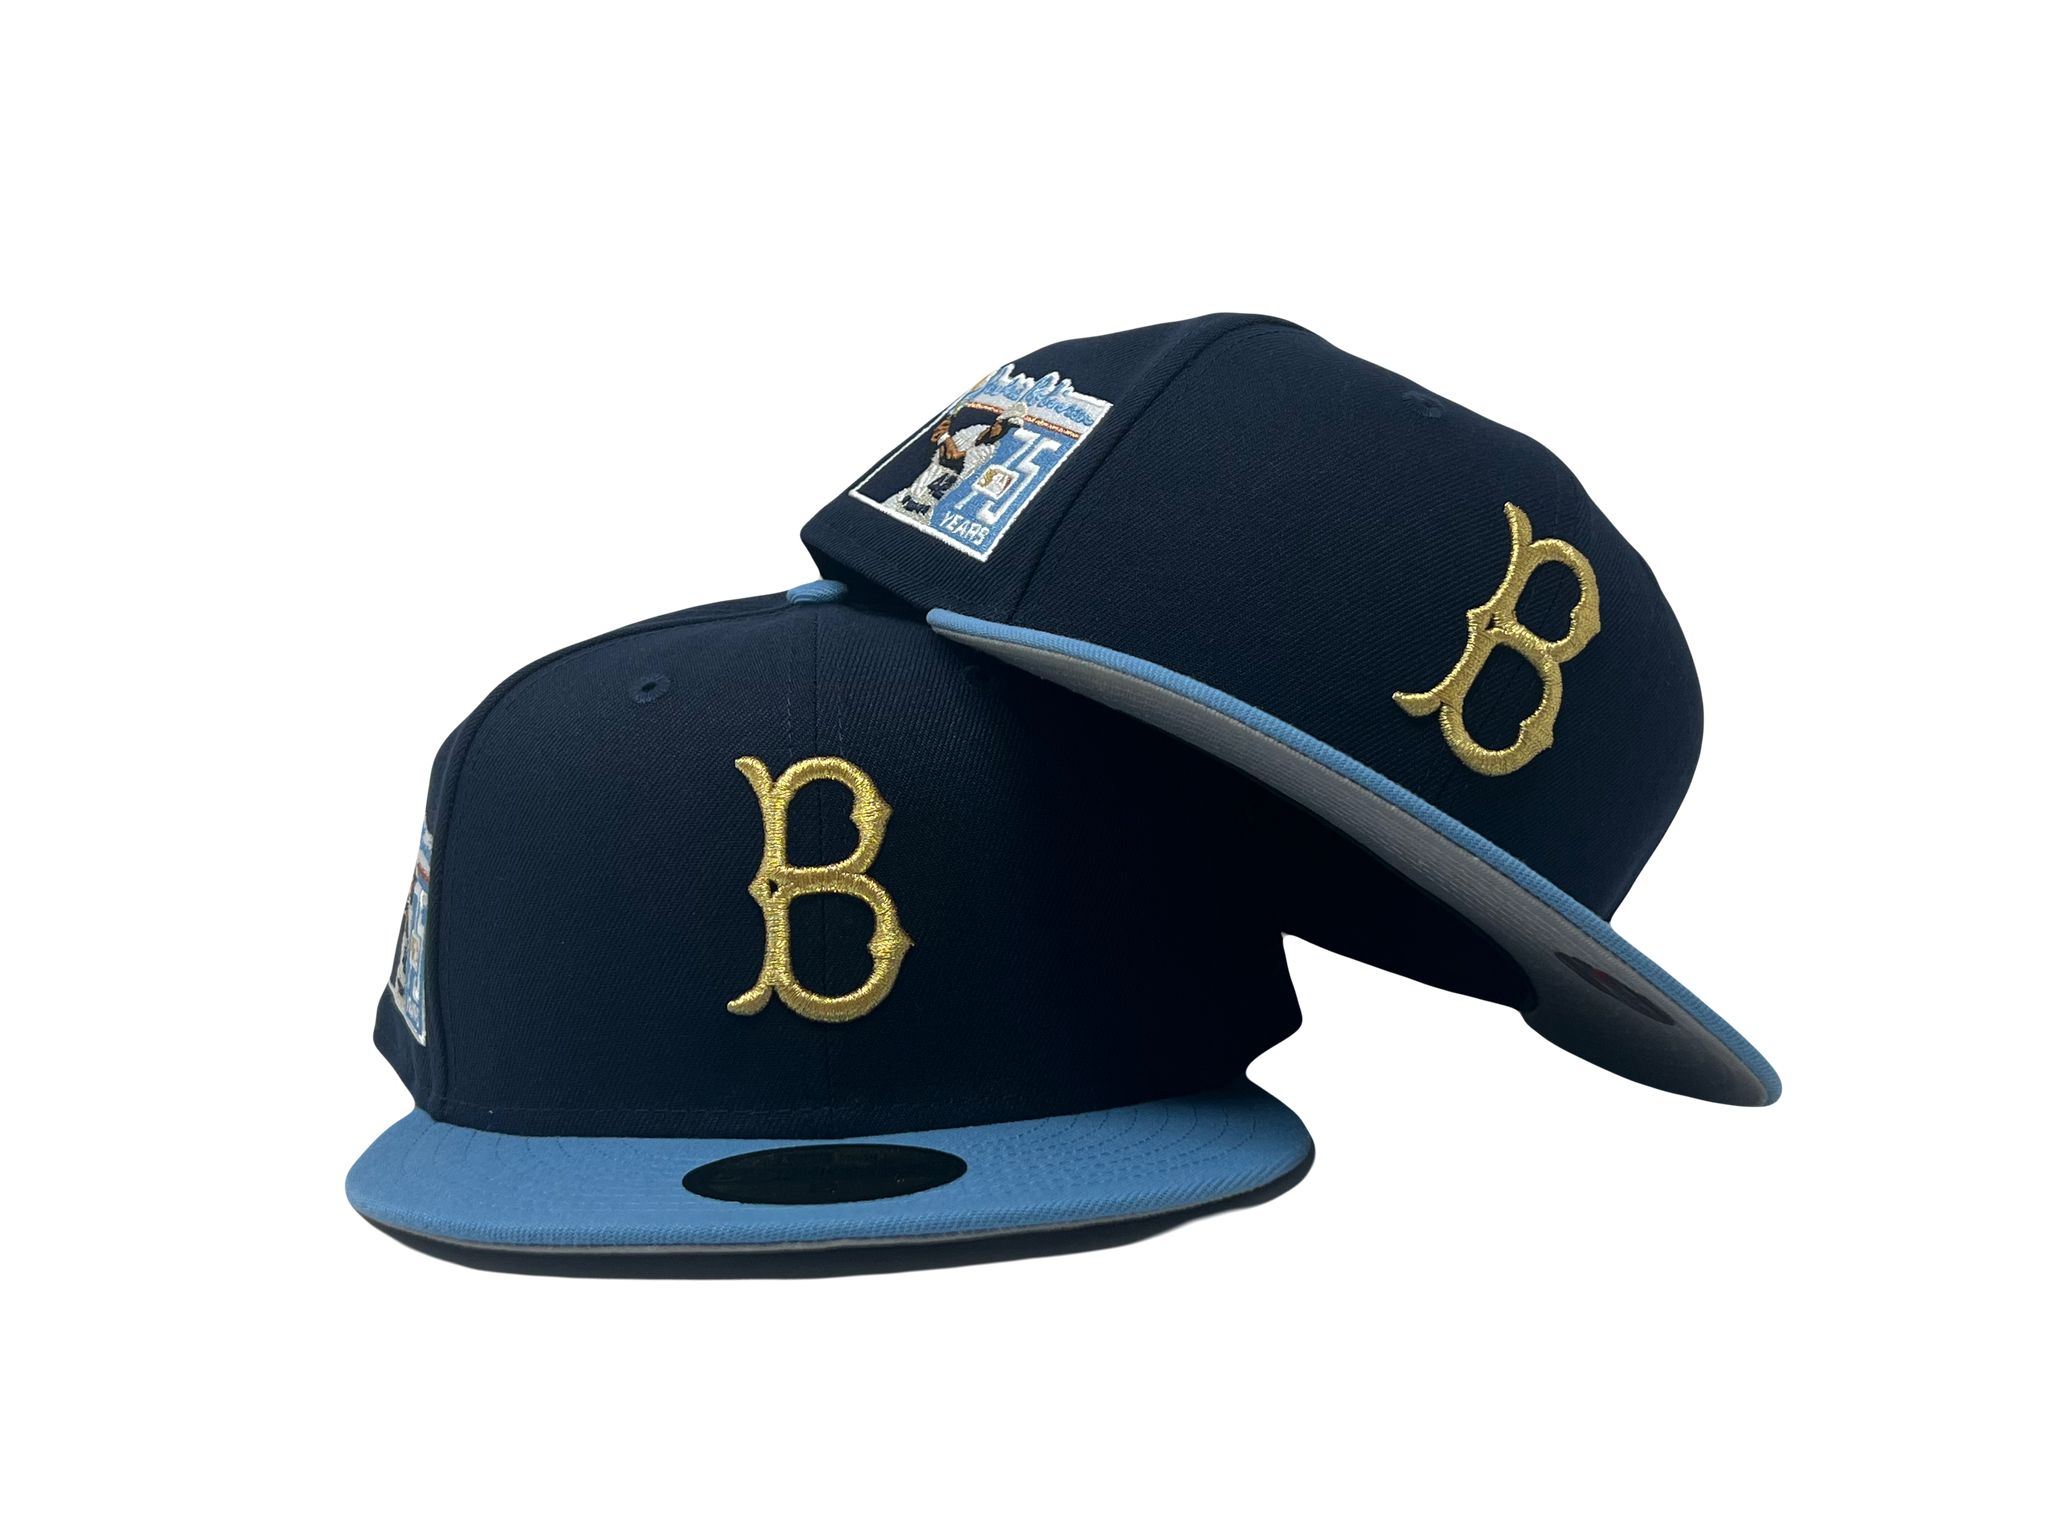 Brooklyn Dodgers Jackie Robinson Hat